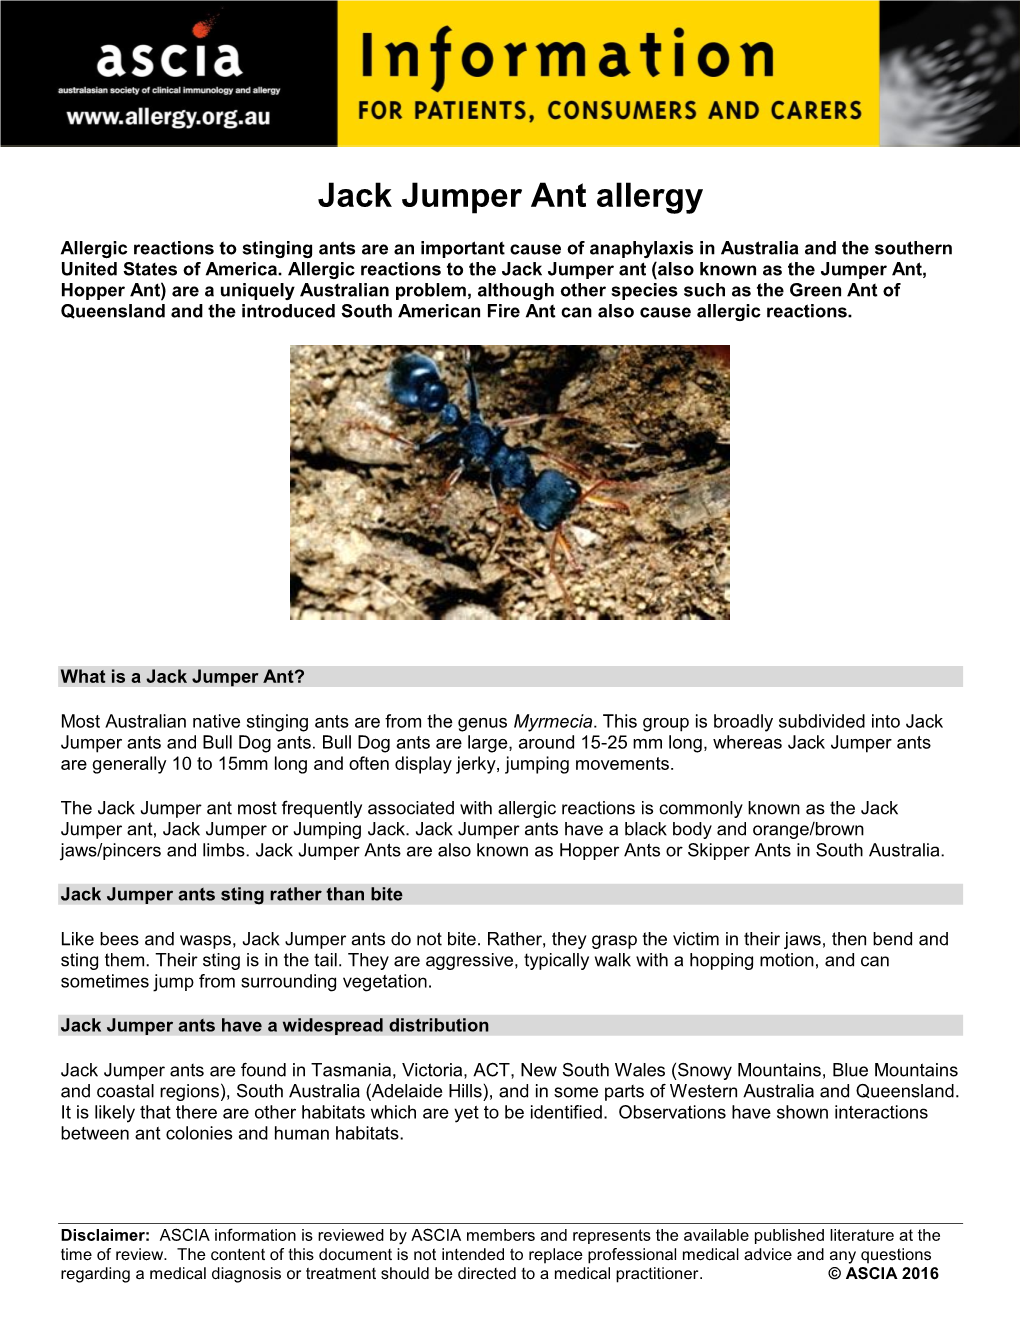 Jack Jumper Ant Allergy